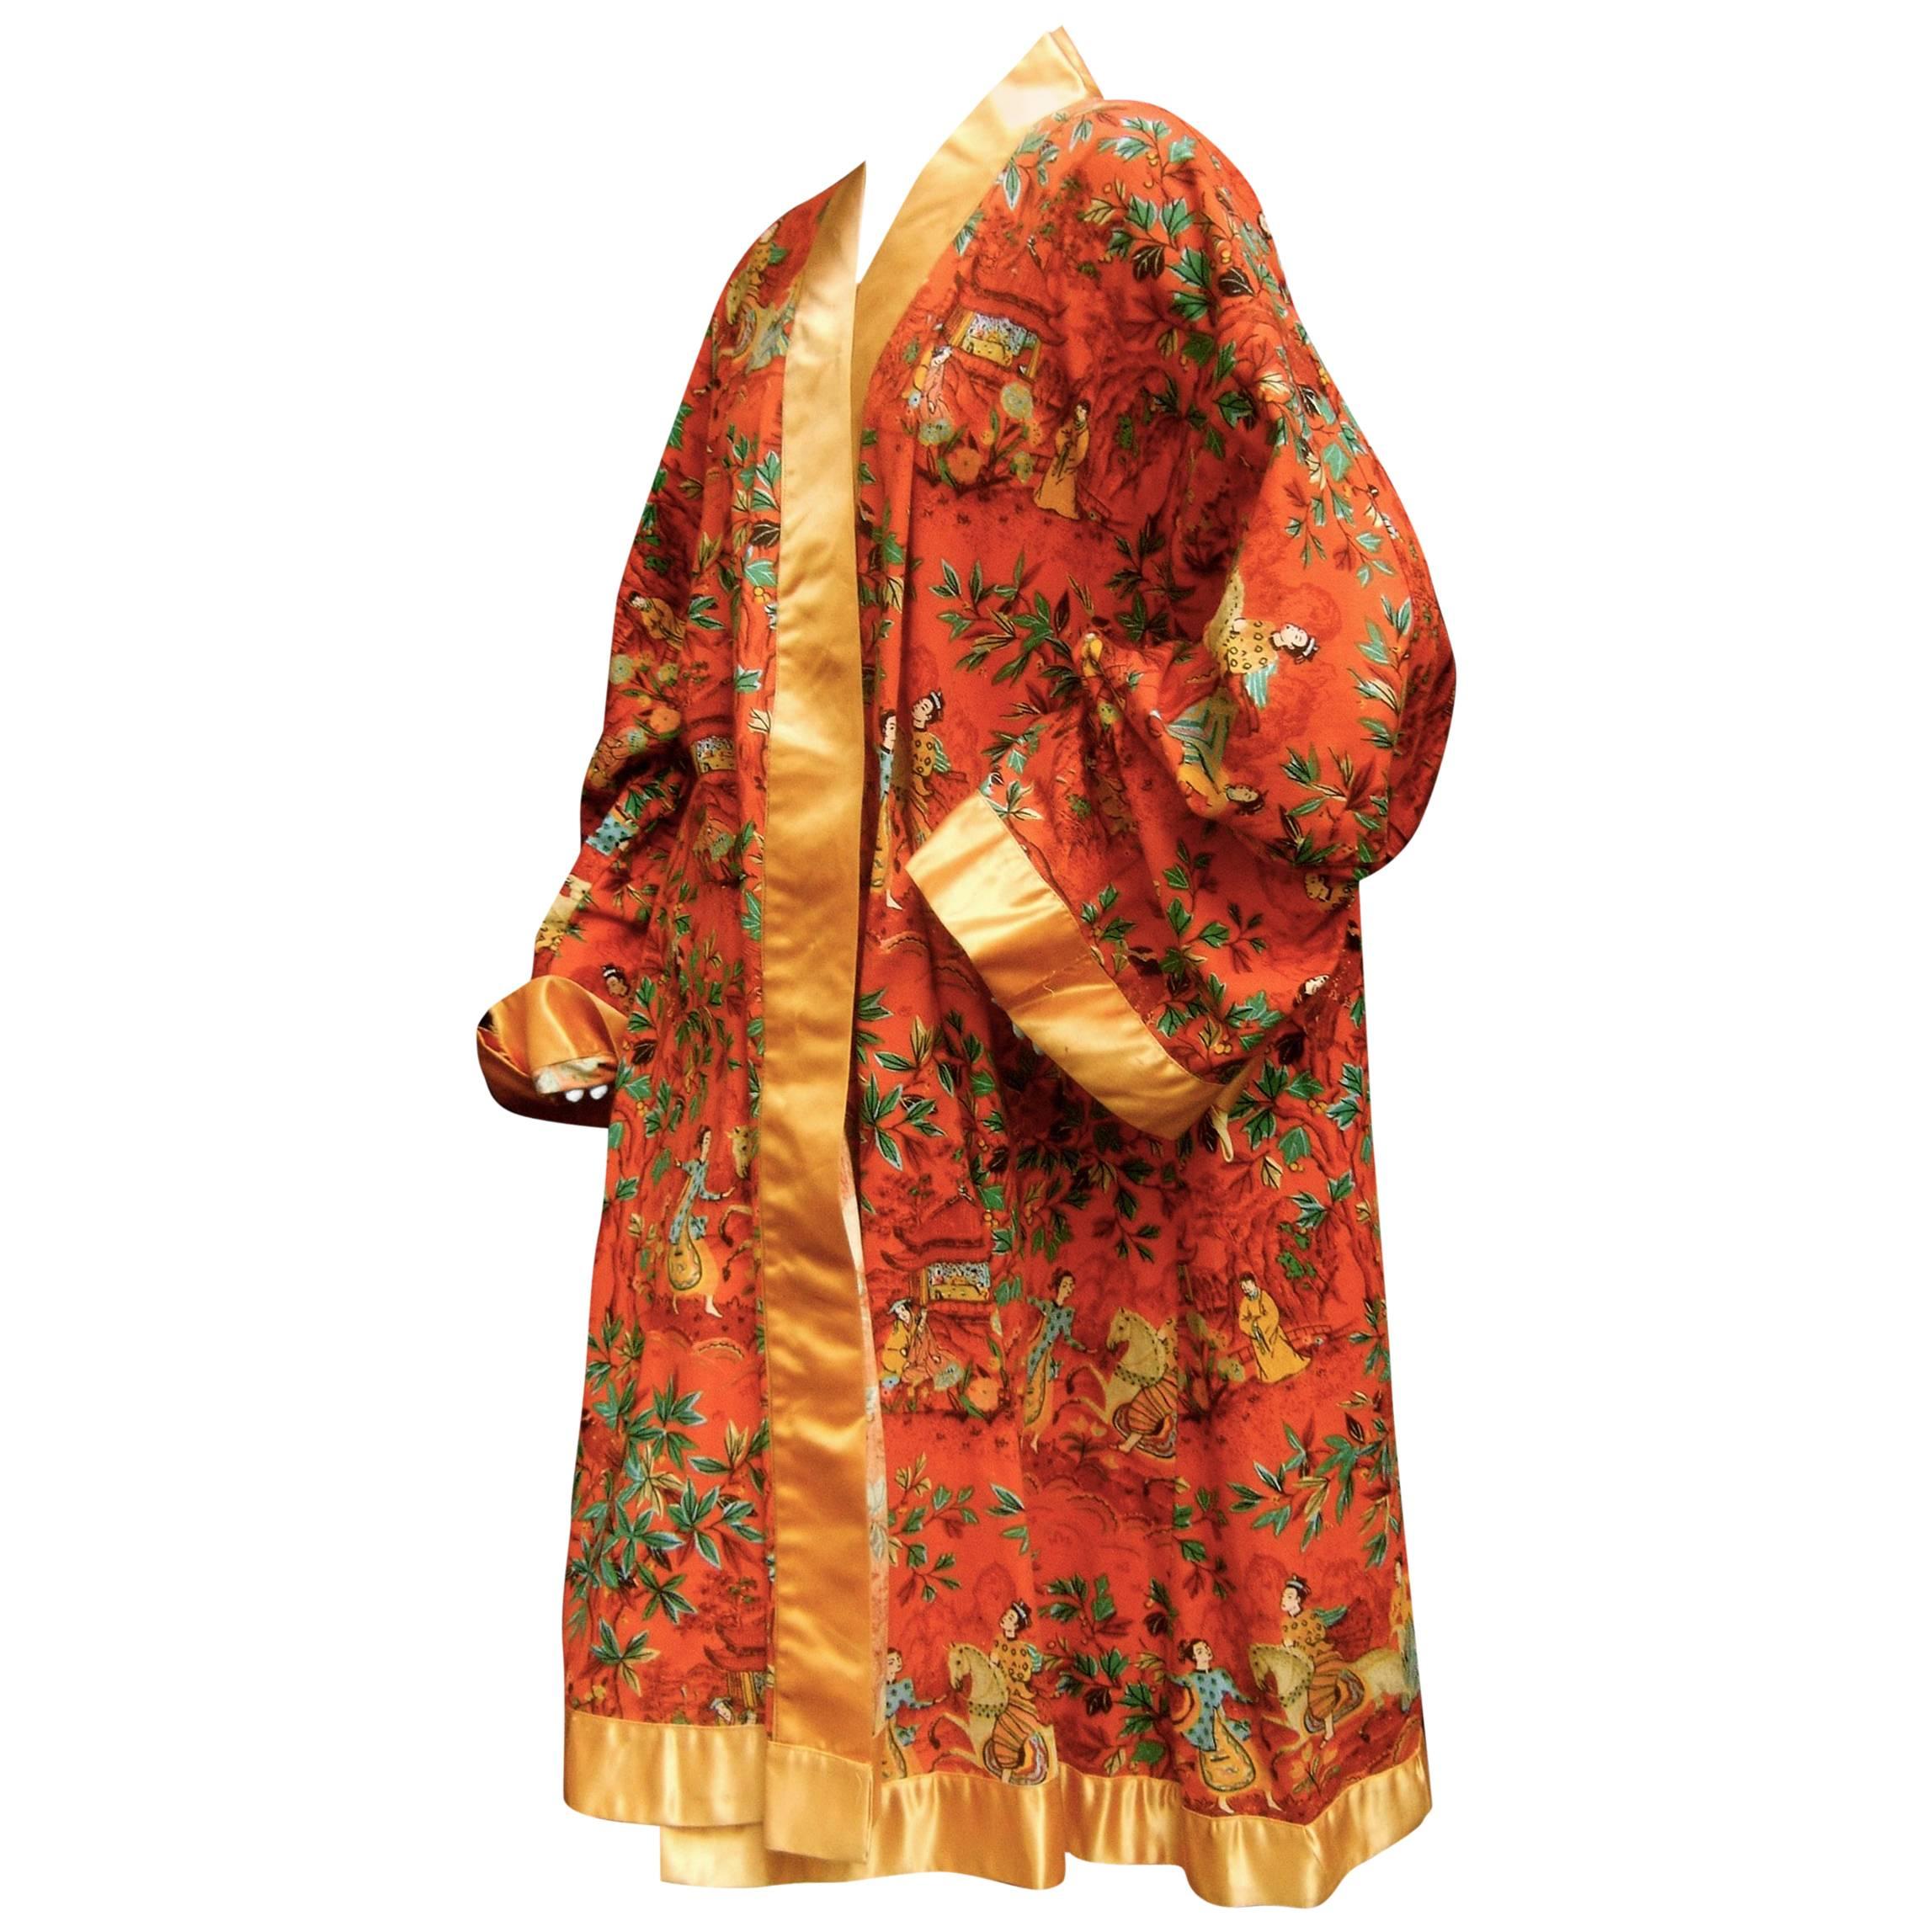 Asian Theme Cotton Illustrated Duster Robe Coat c 1970s